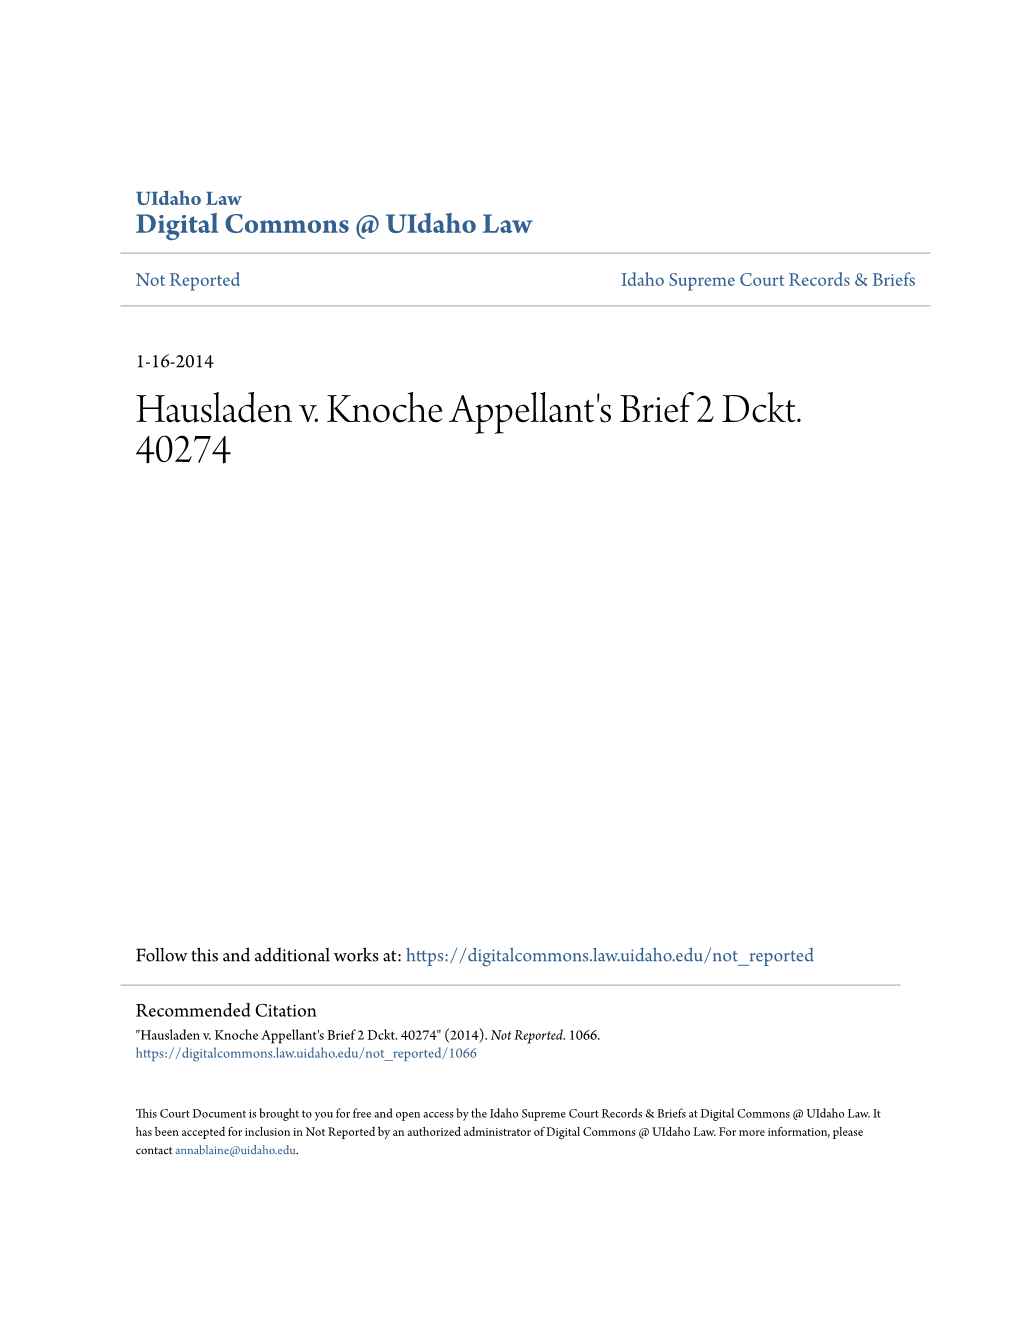 Hausladen V. Knoche Appellant's Brief 2 Dckt. 40274